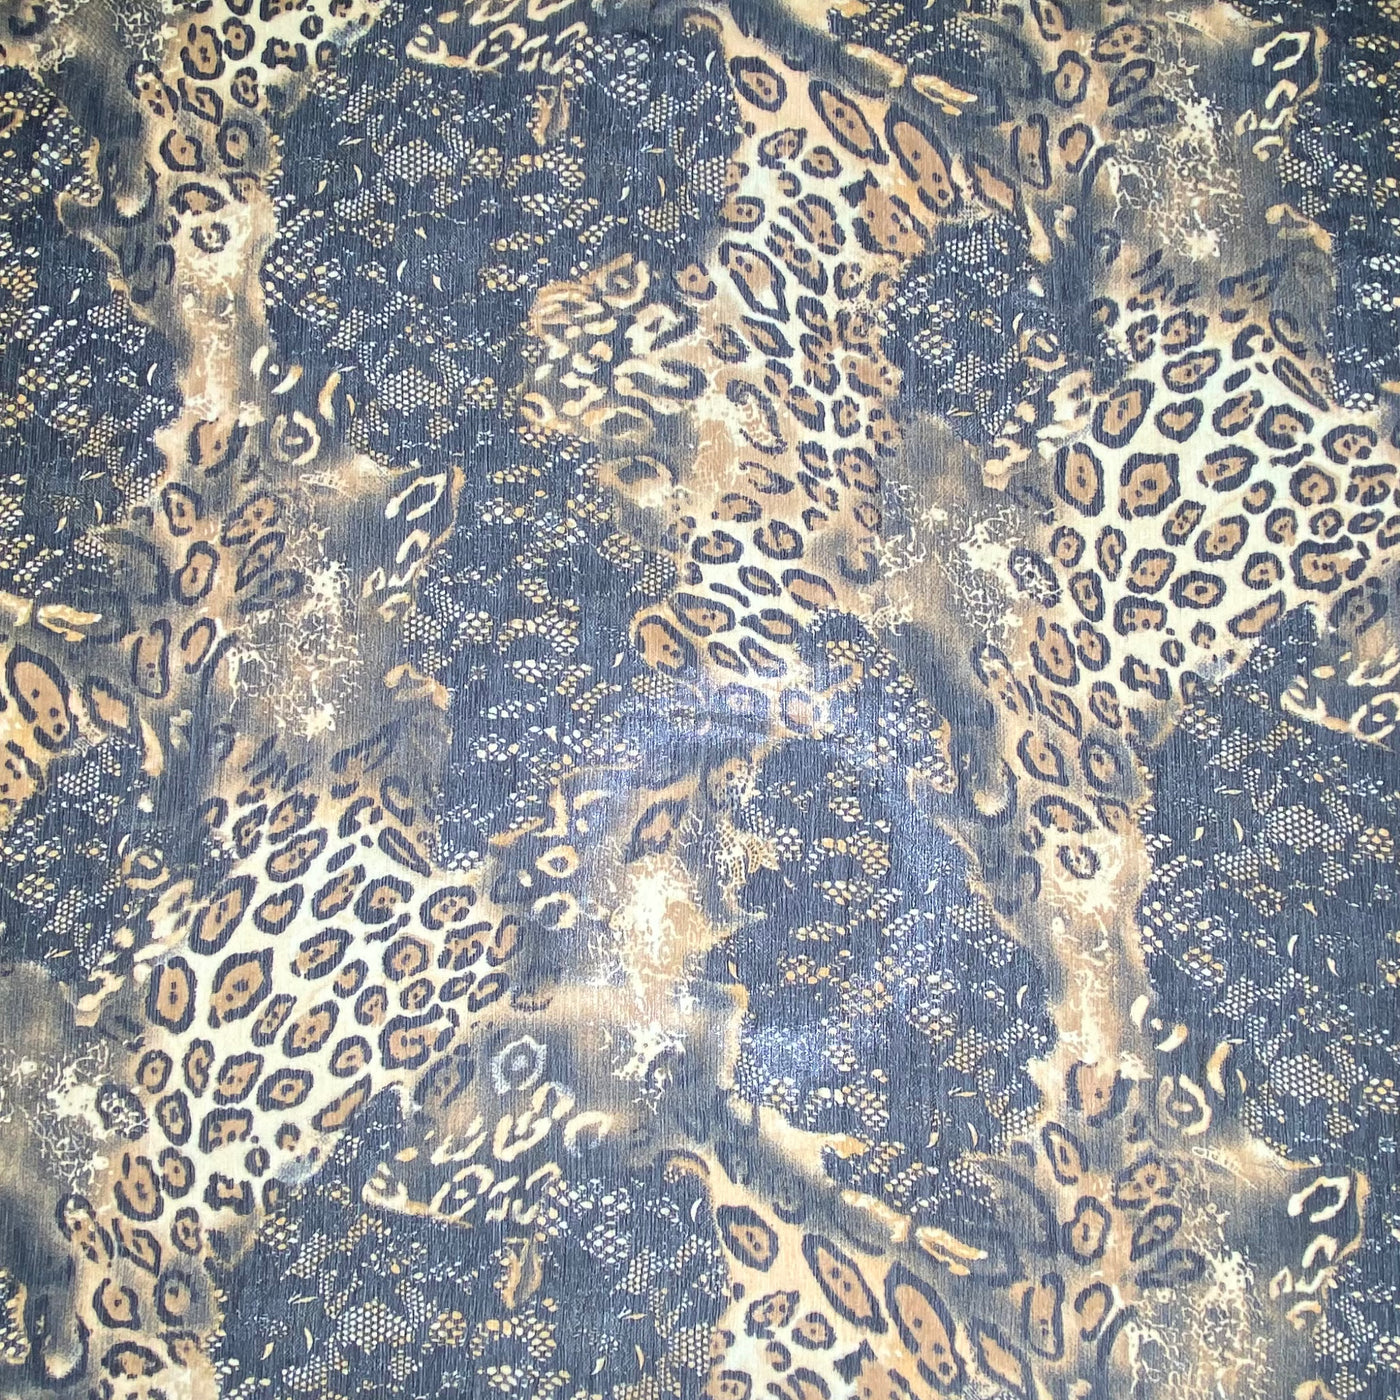 Printed Crinkled Polyester Chiffon - Cheetah